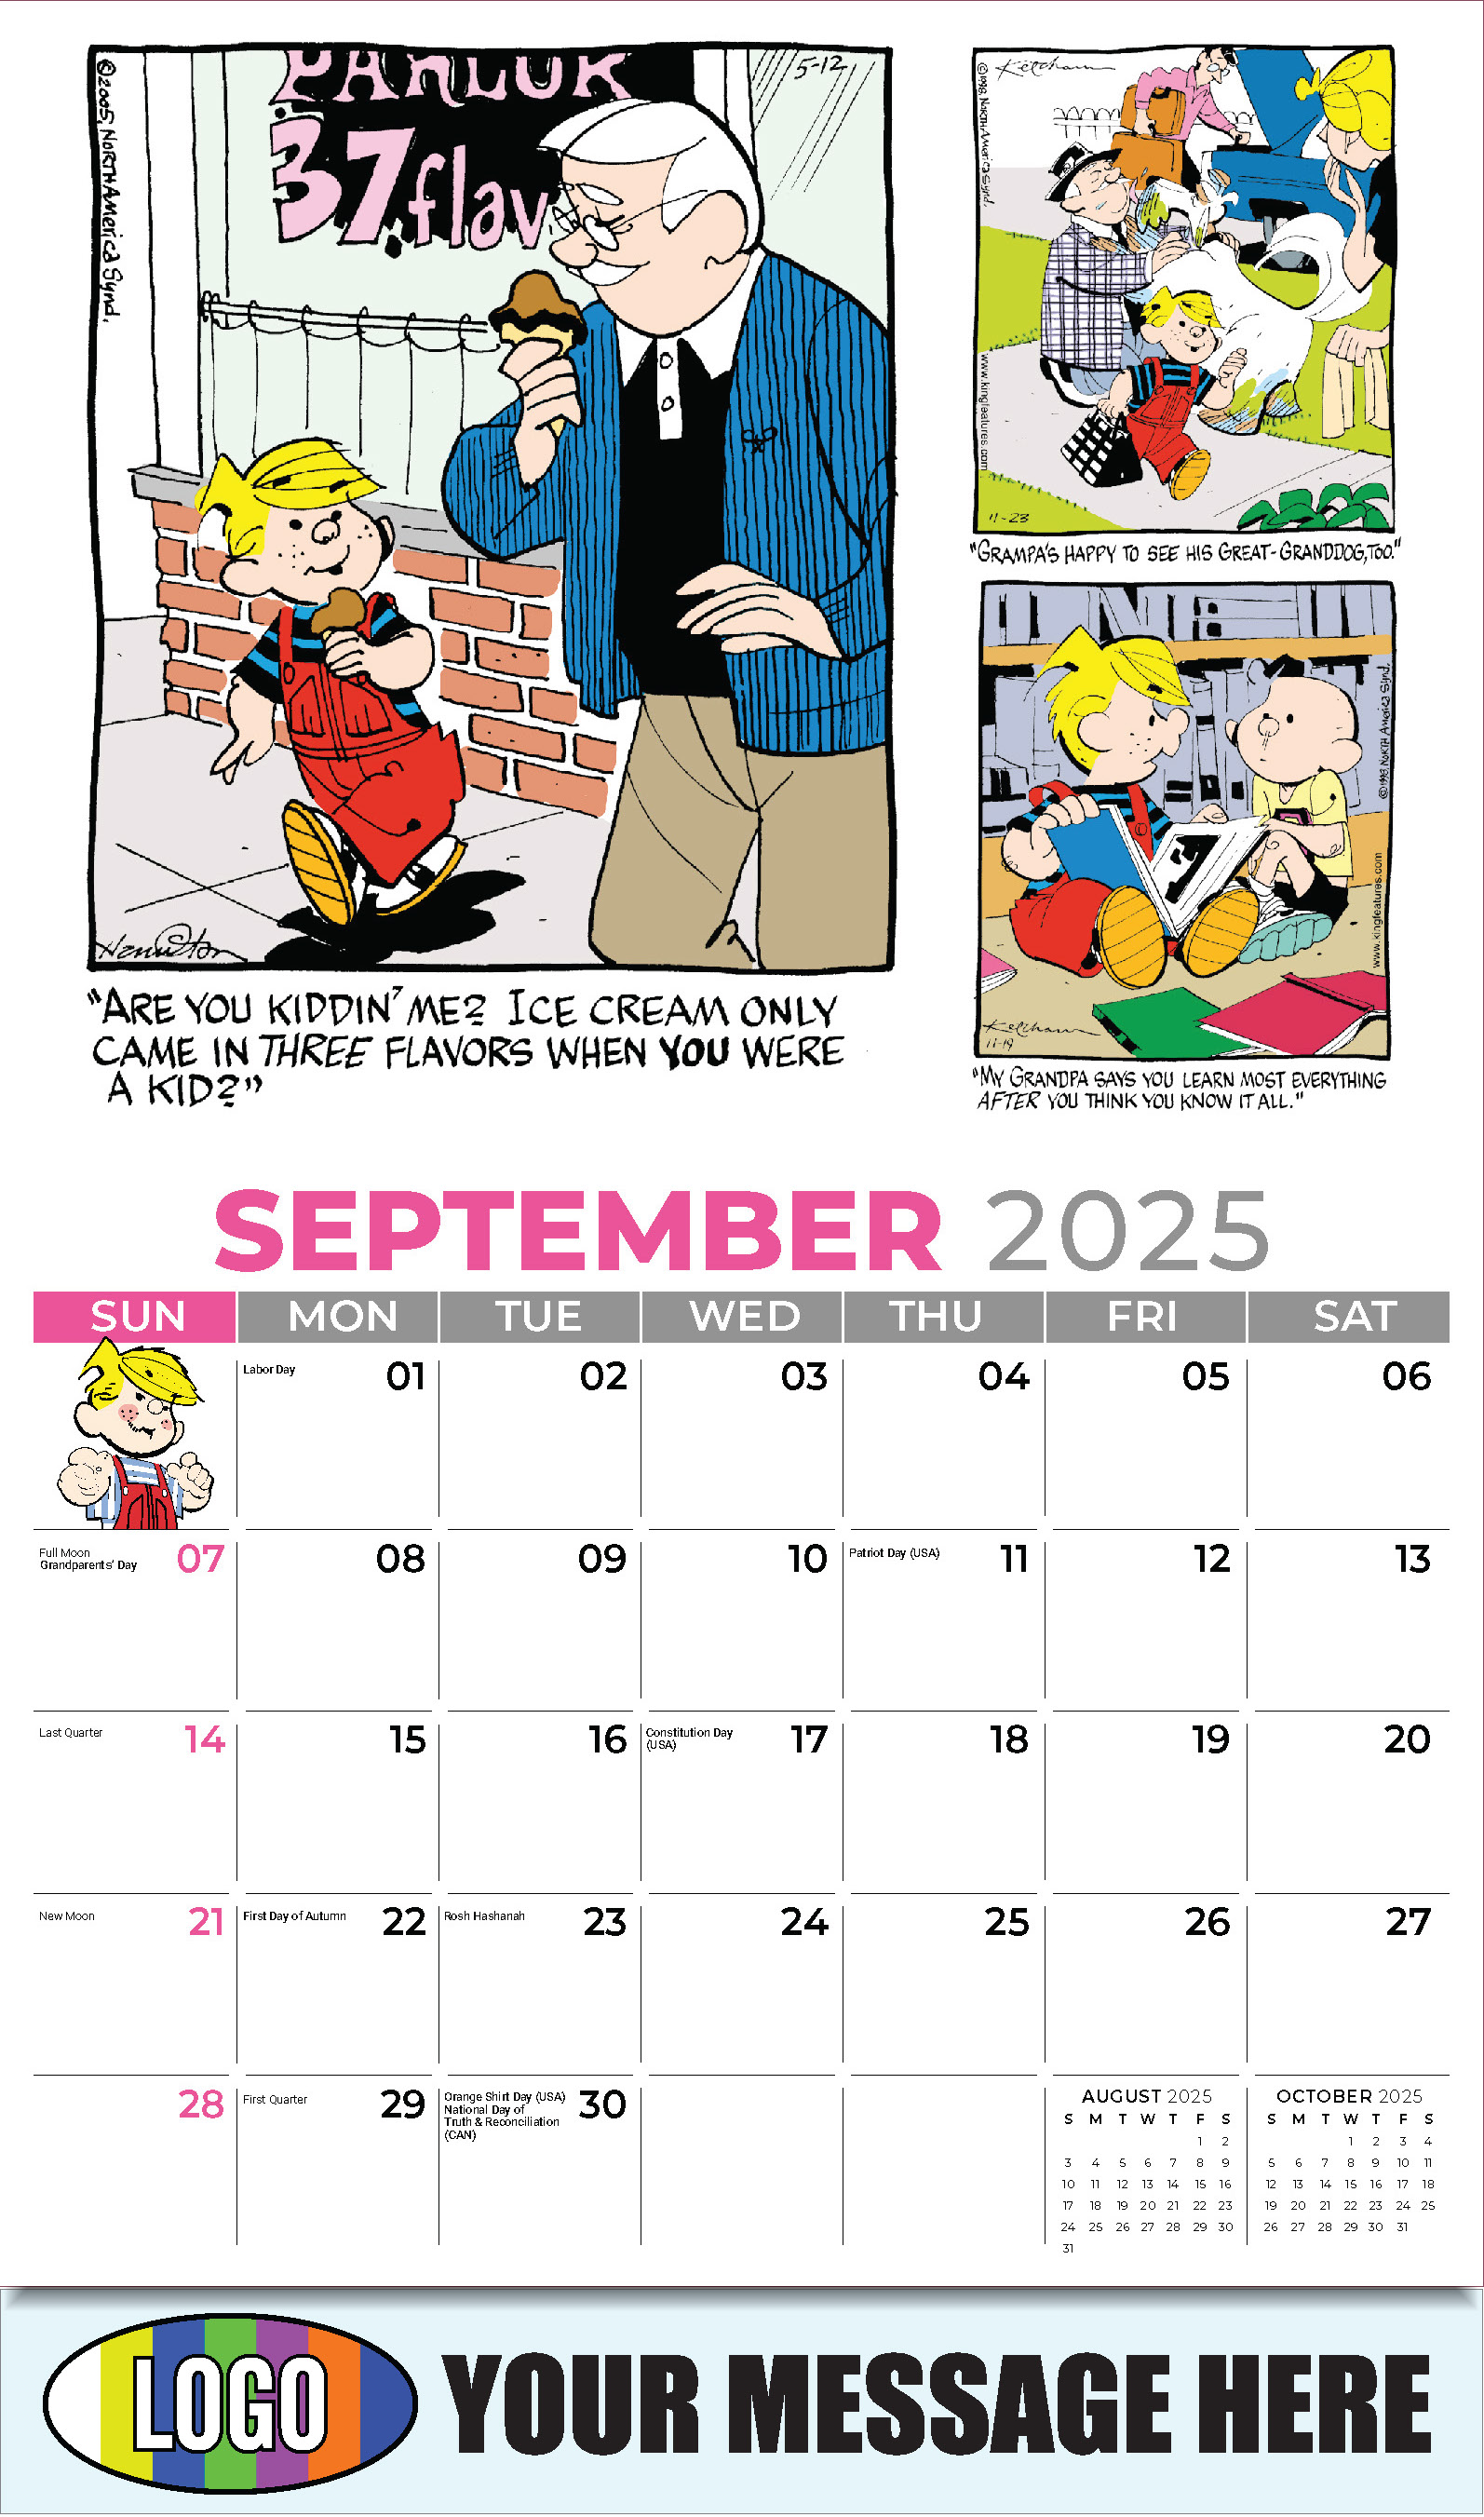 Dennis the Menace 2025 Business Promotional Wall Calendar - September